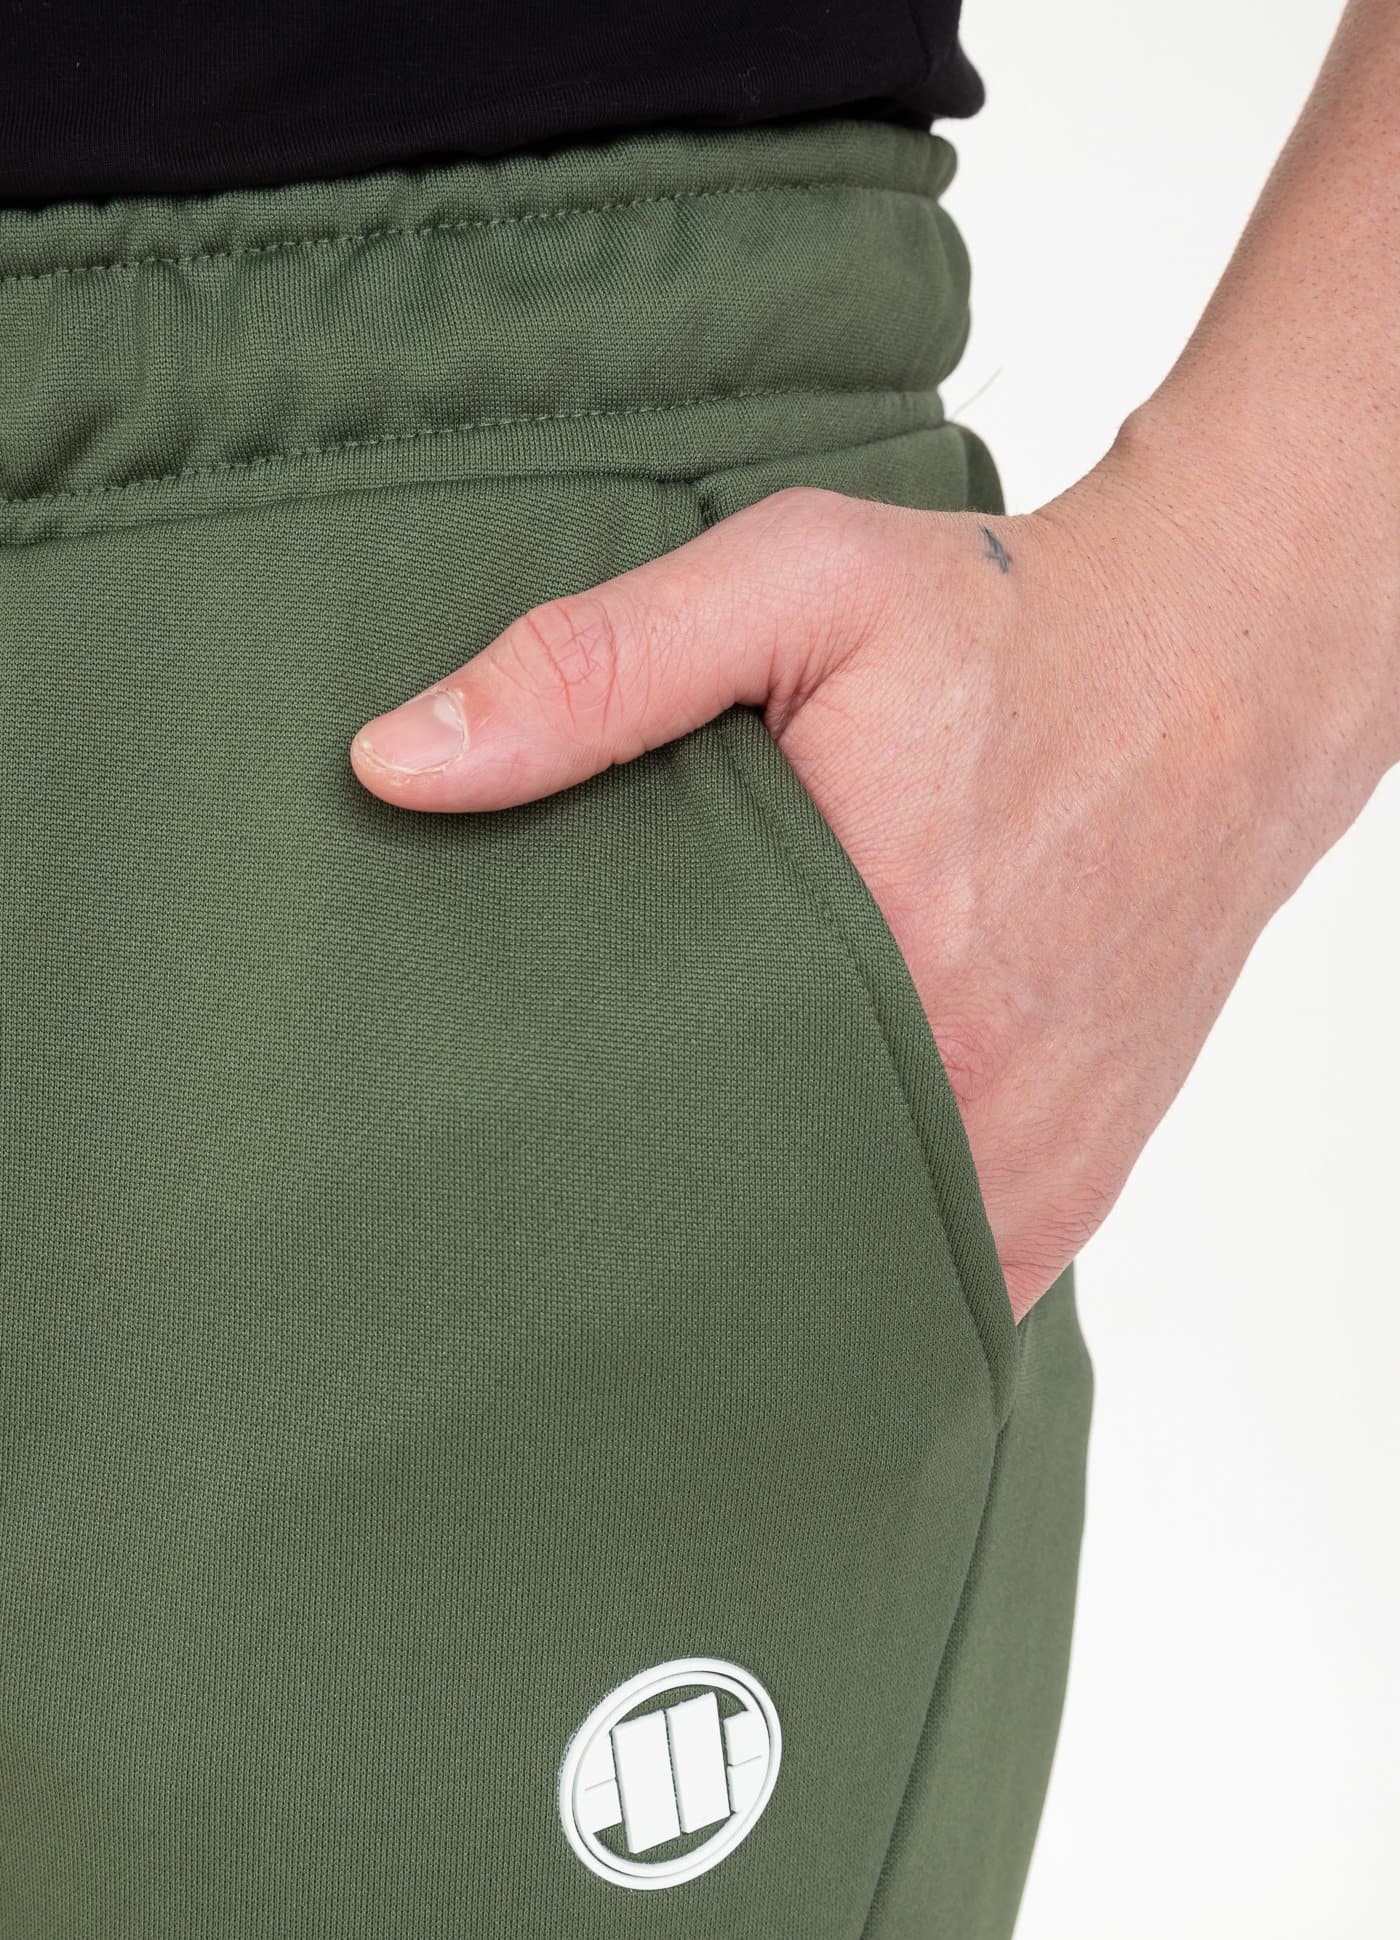 JOLGER Men's Polyester Olive Green Colour Jogger/Track Pants with Bond